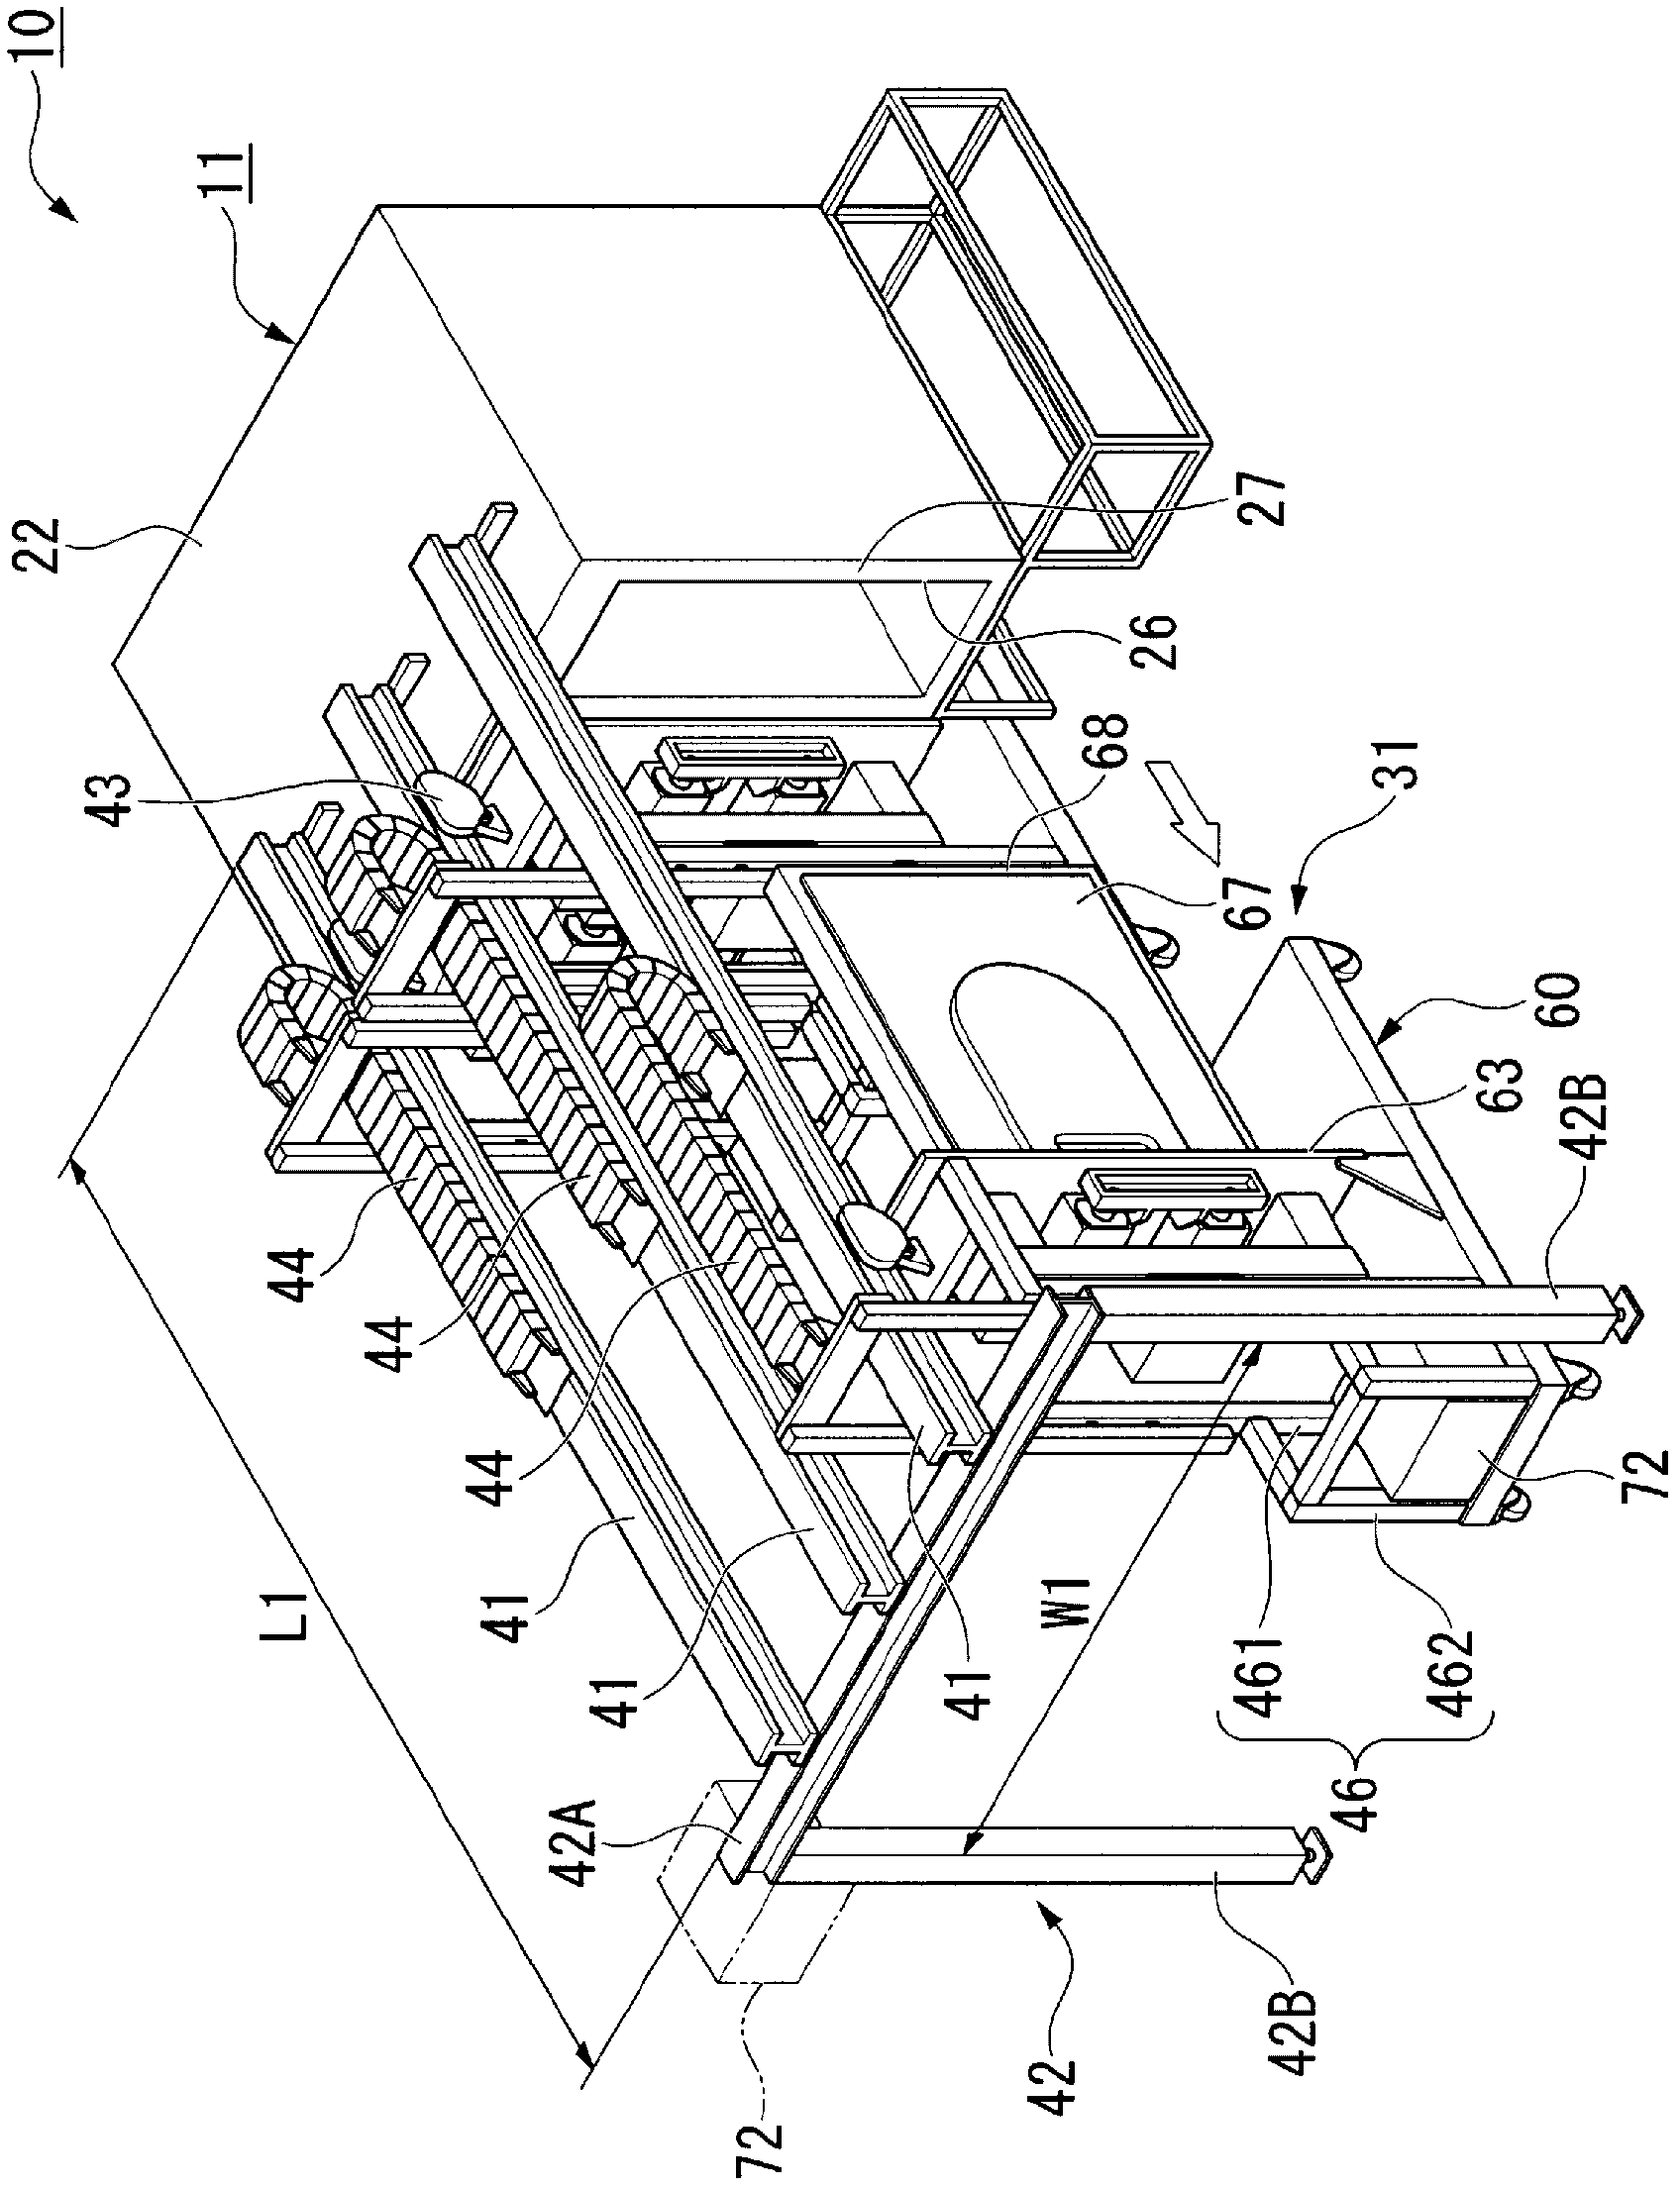 Film-forming apparatus